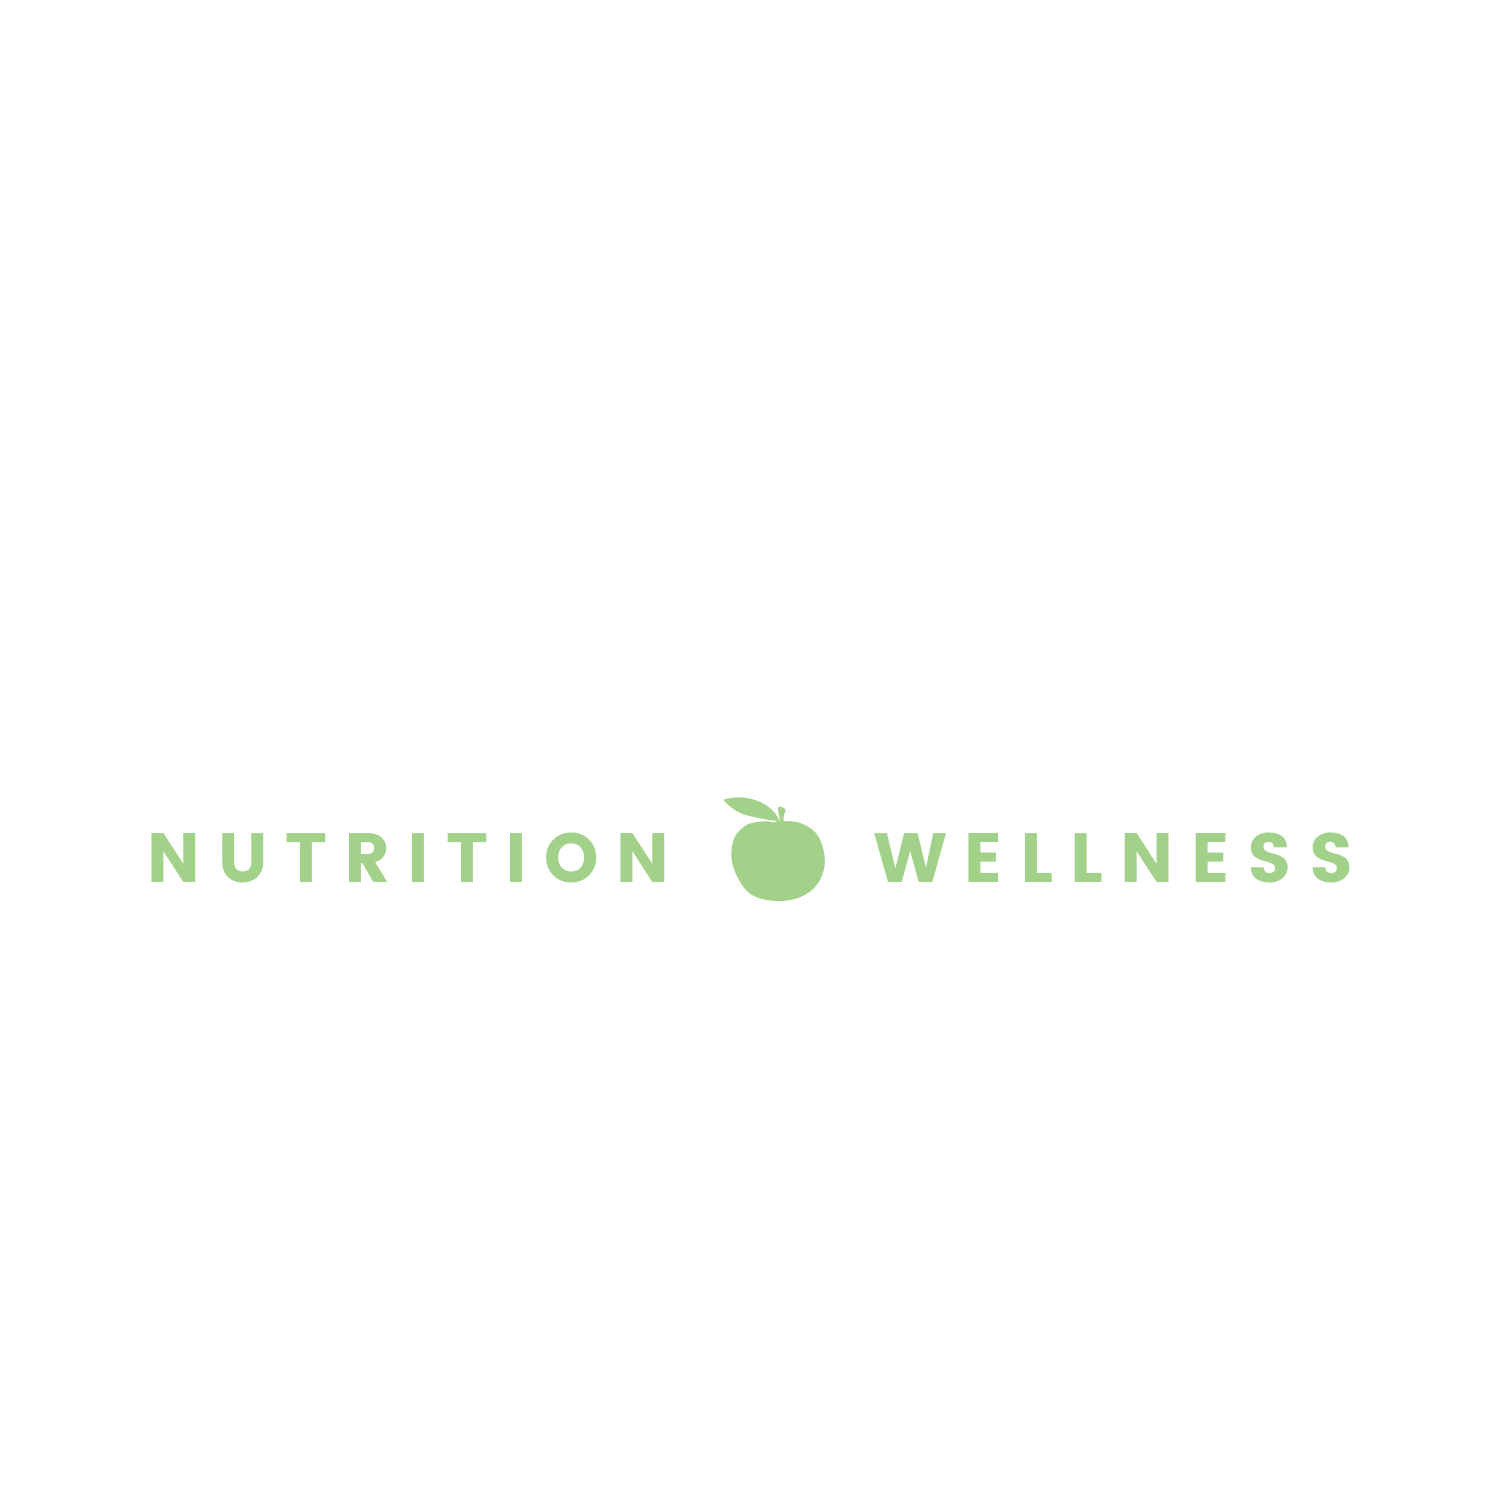 Music City Nutrition &amp; Wellness